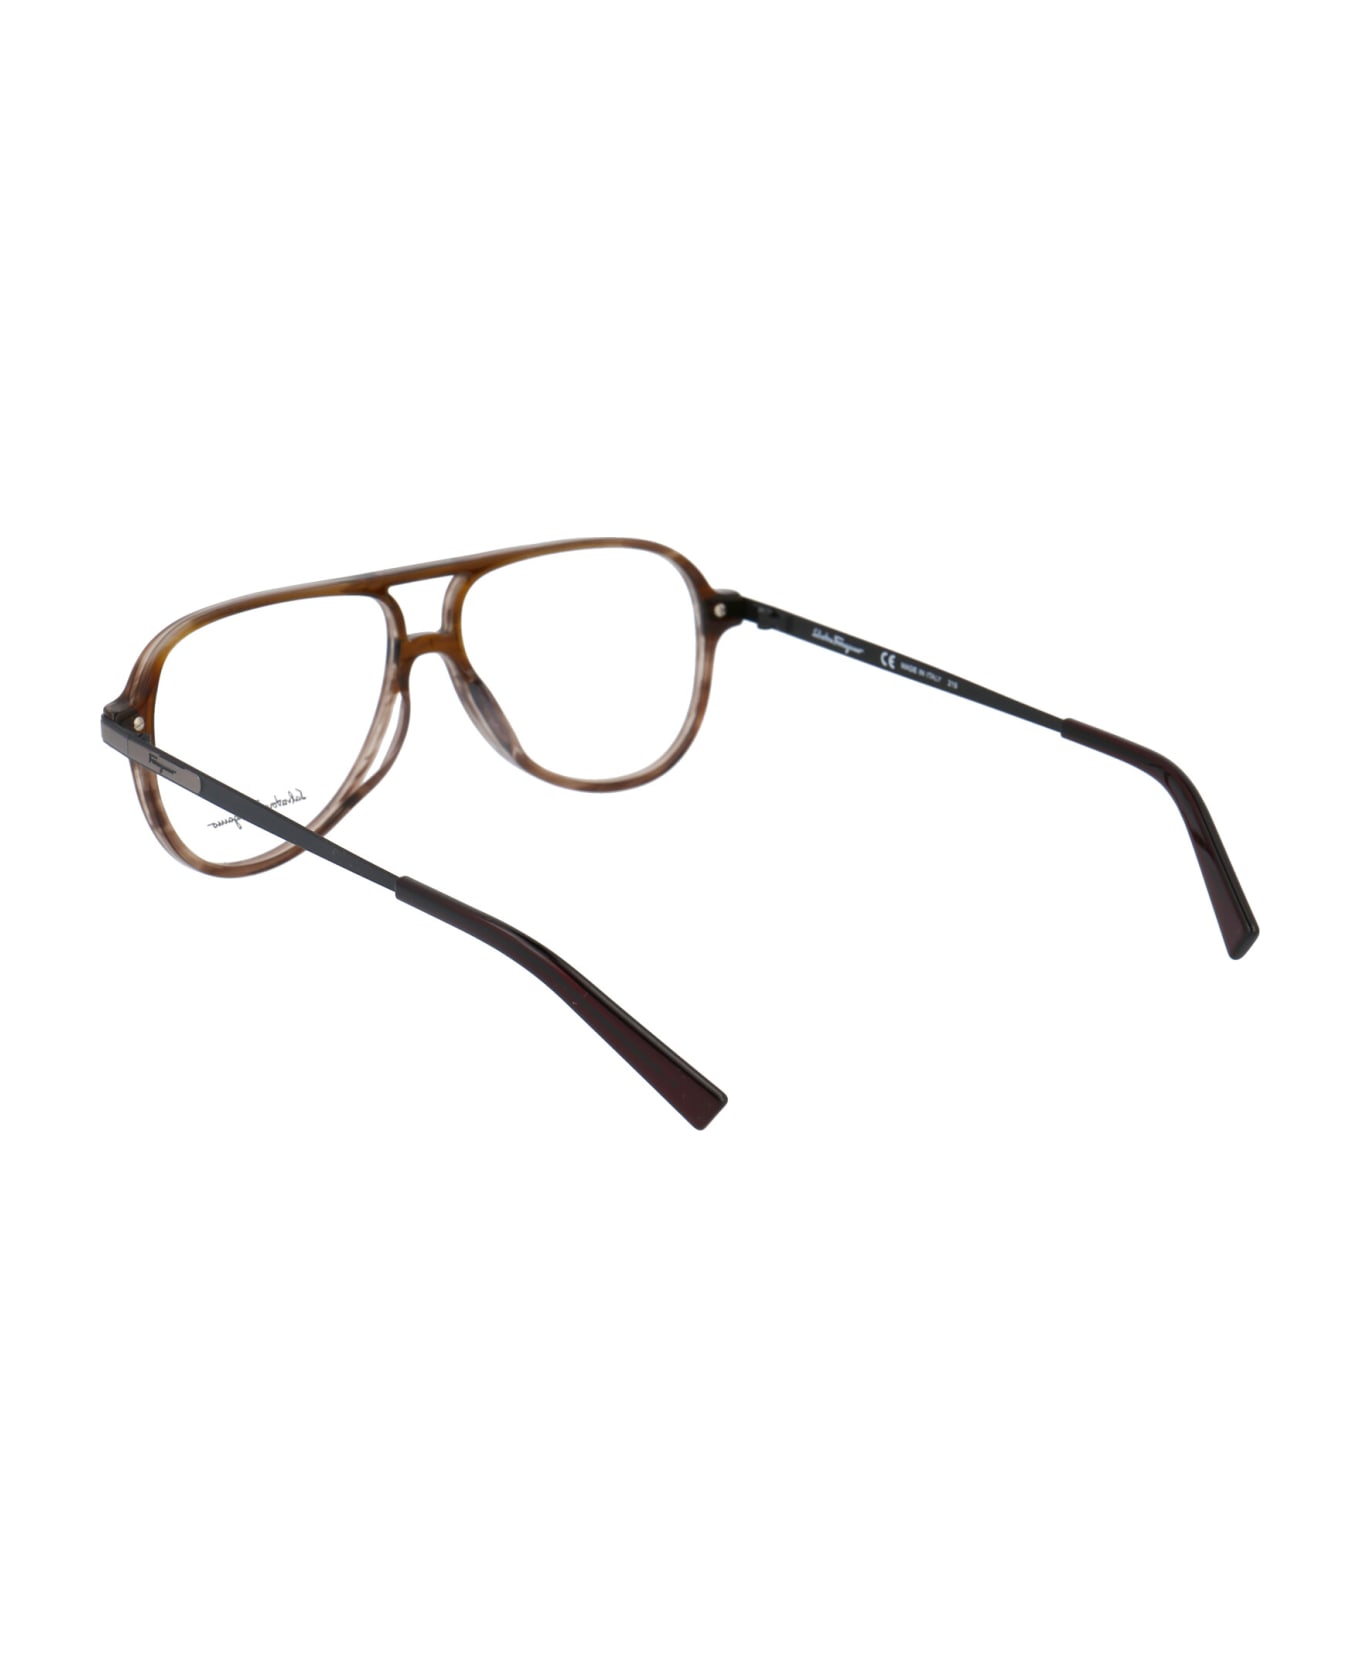 Salvatore Ferragamo Eyewear Sf2855 Glasses - 340 DARK MUSTARD TAUPE